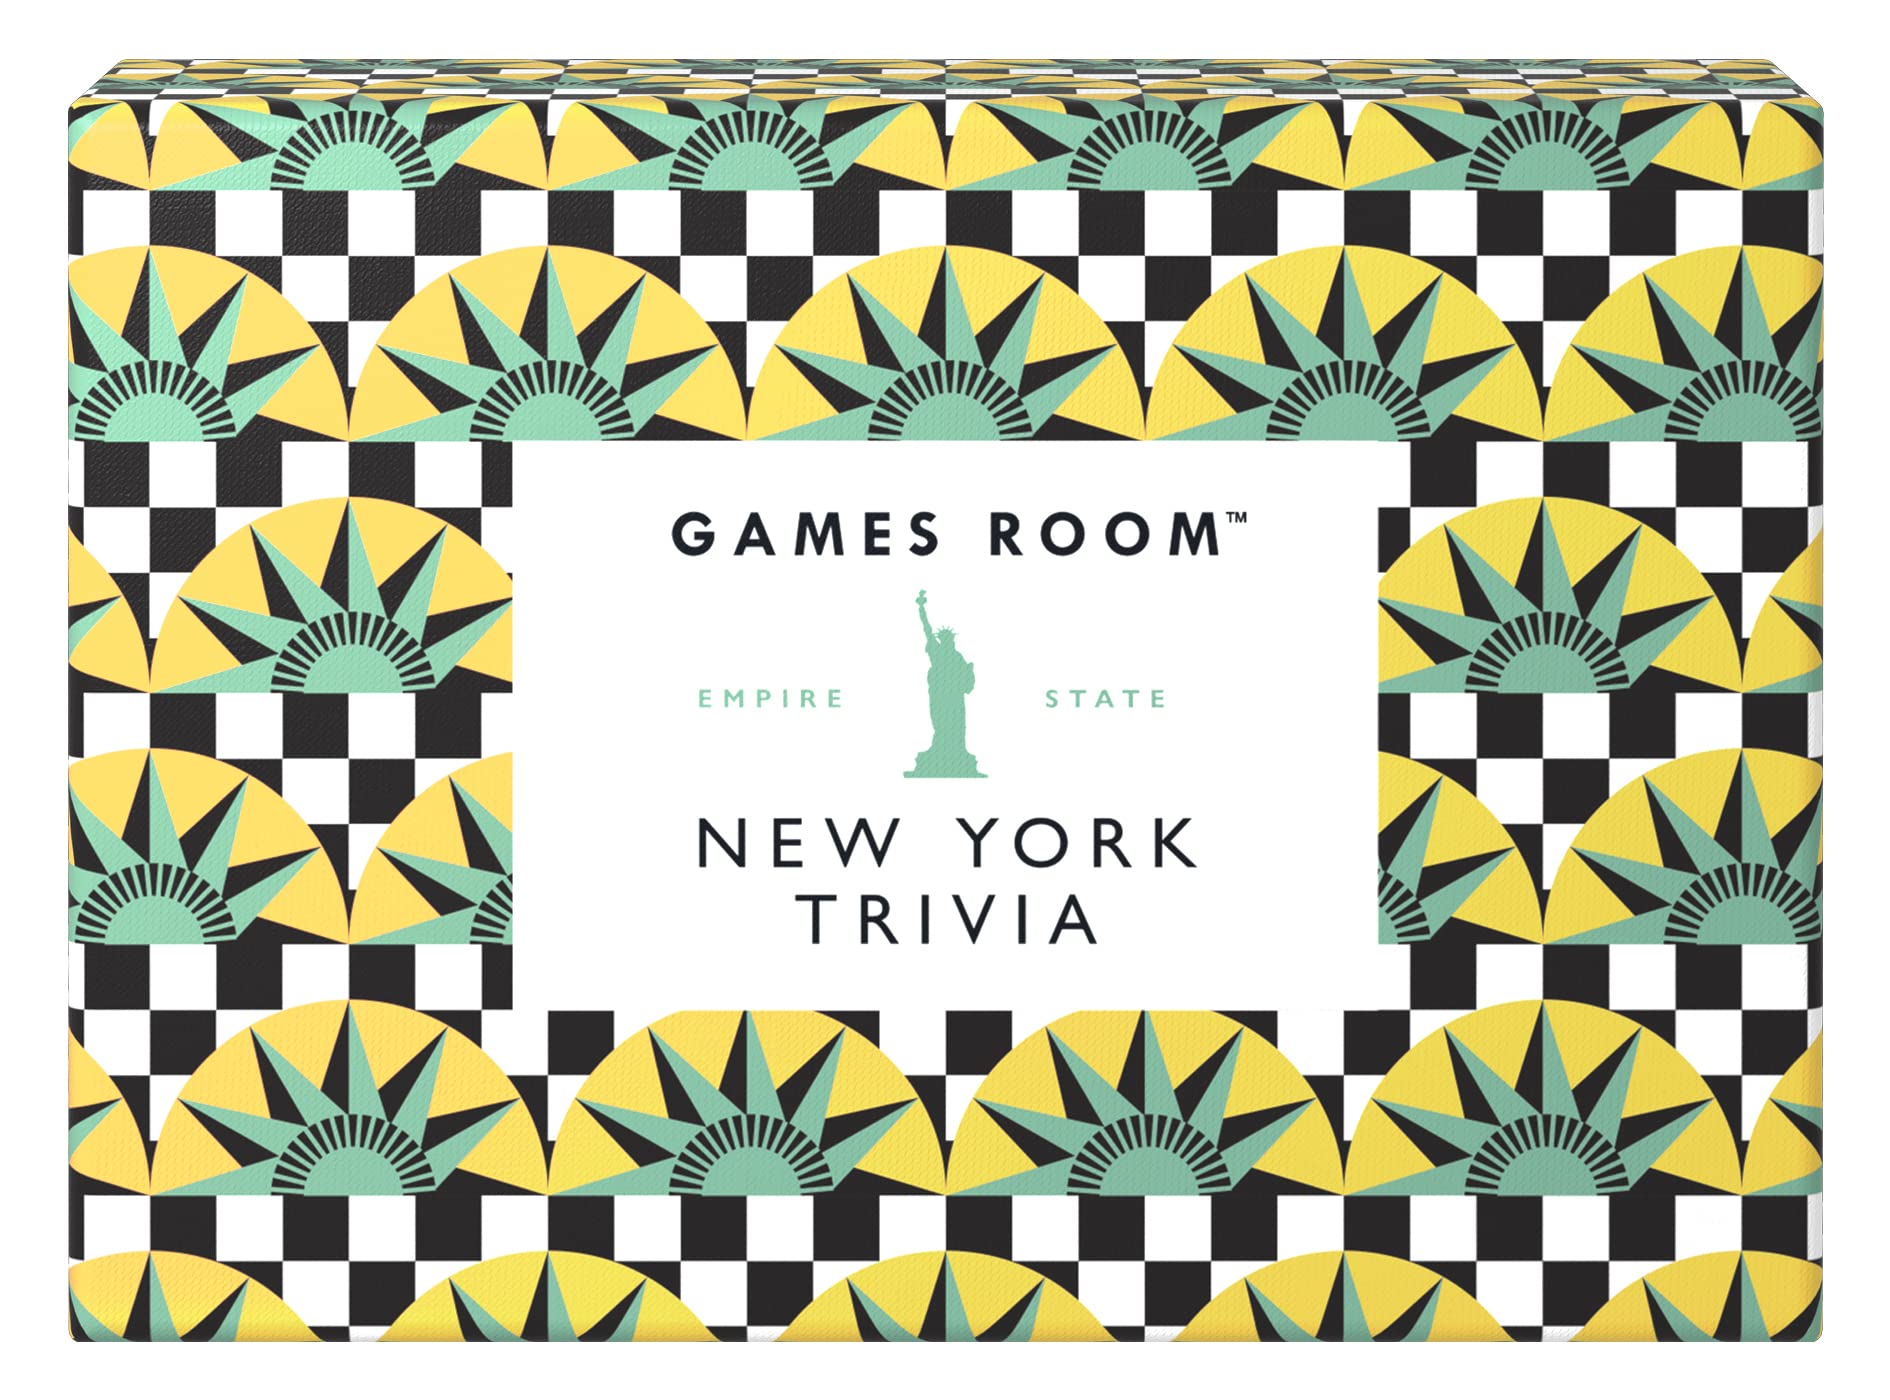 Games Room New York Trivia